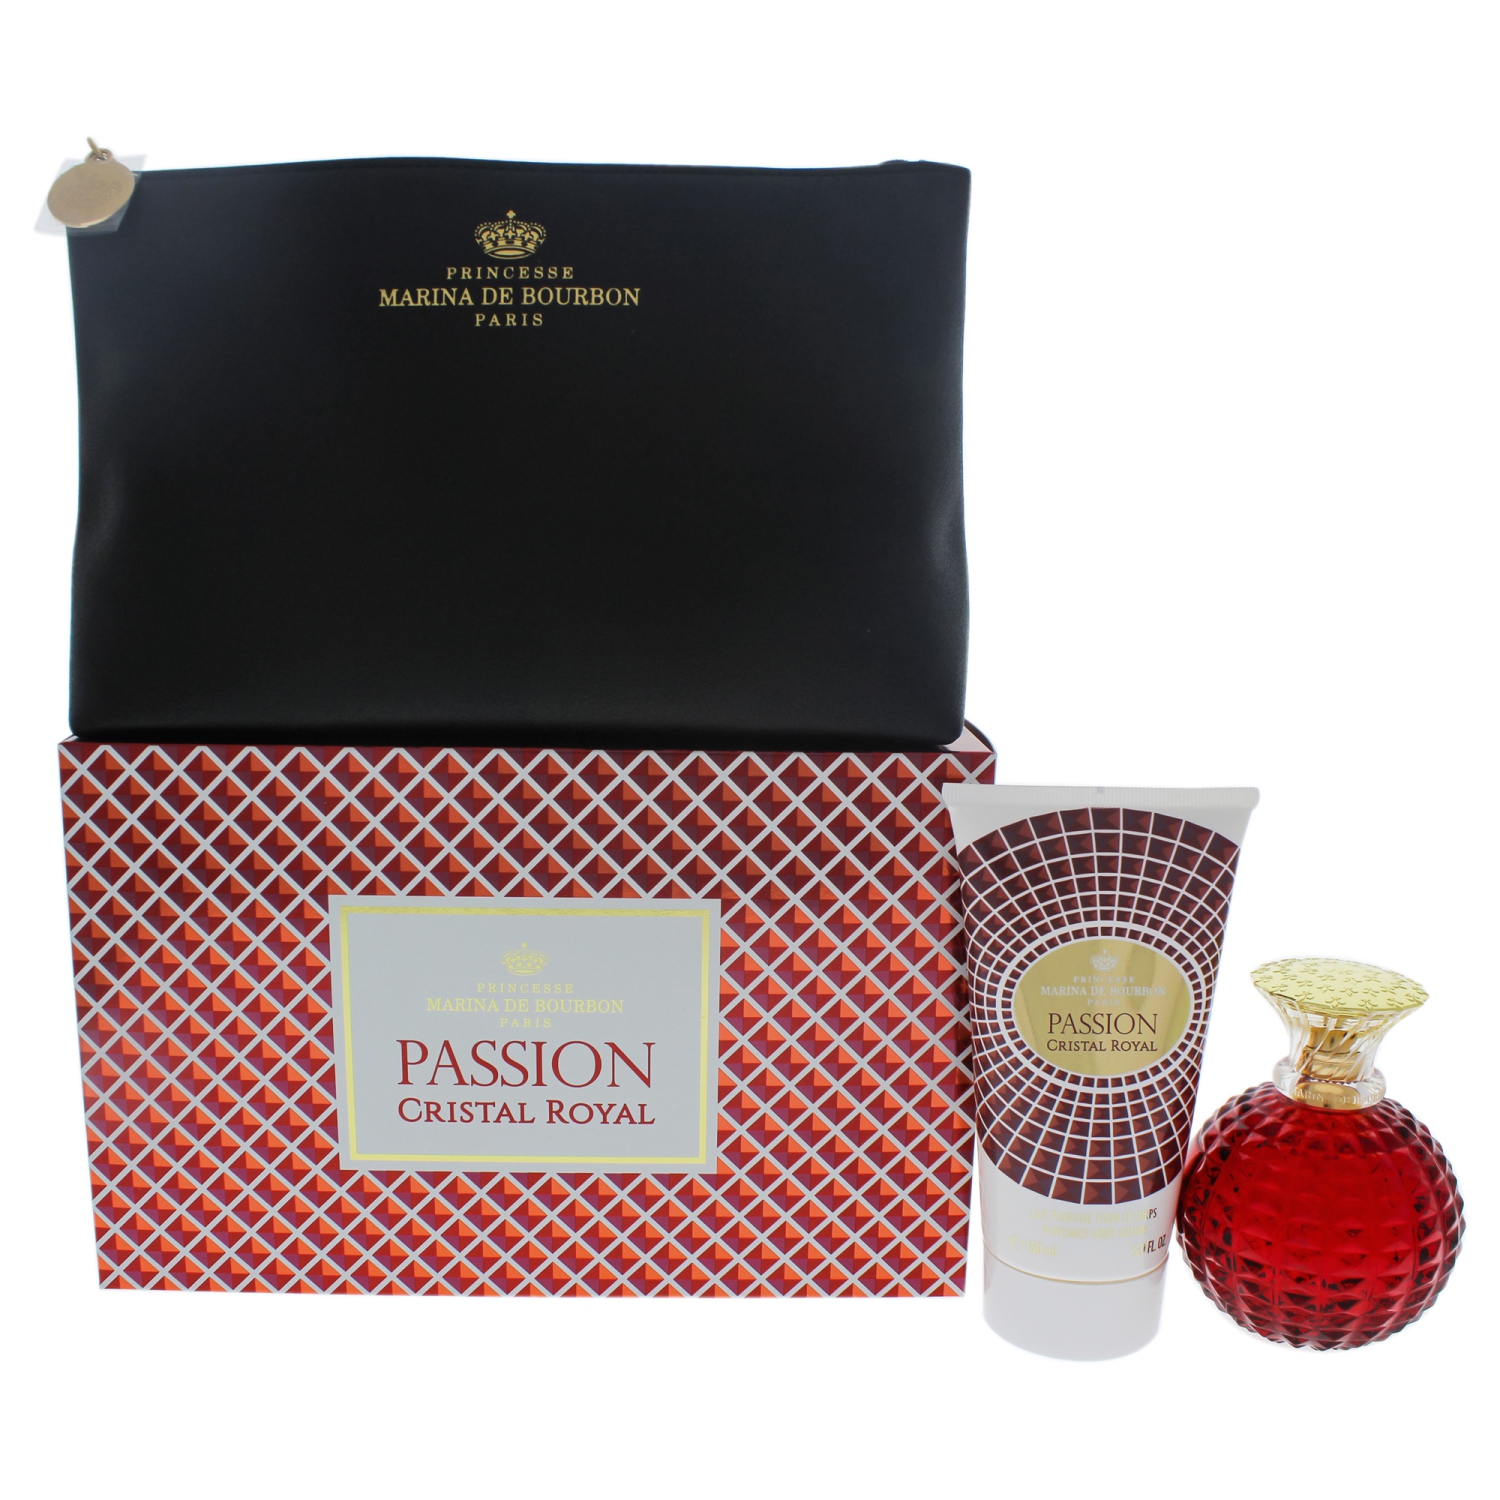 Cristal Royal Passion by Princesse Marina de Bourbon for Women - 3 Pc Gift Set 3.4oz EDP Spray, 5oz Body Lotion, Pouch